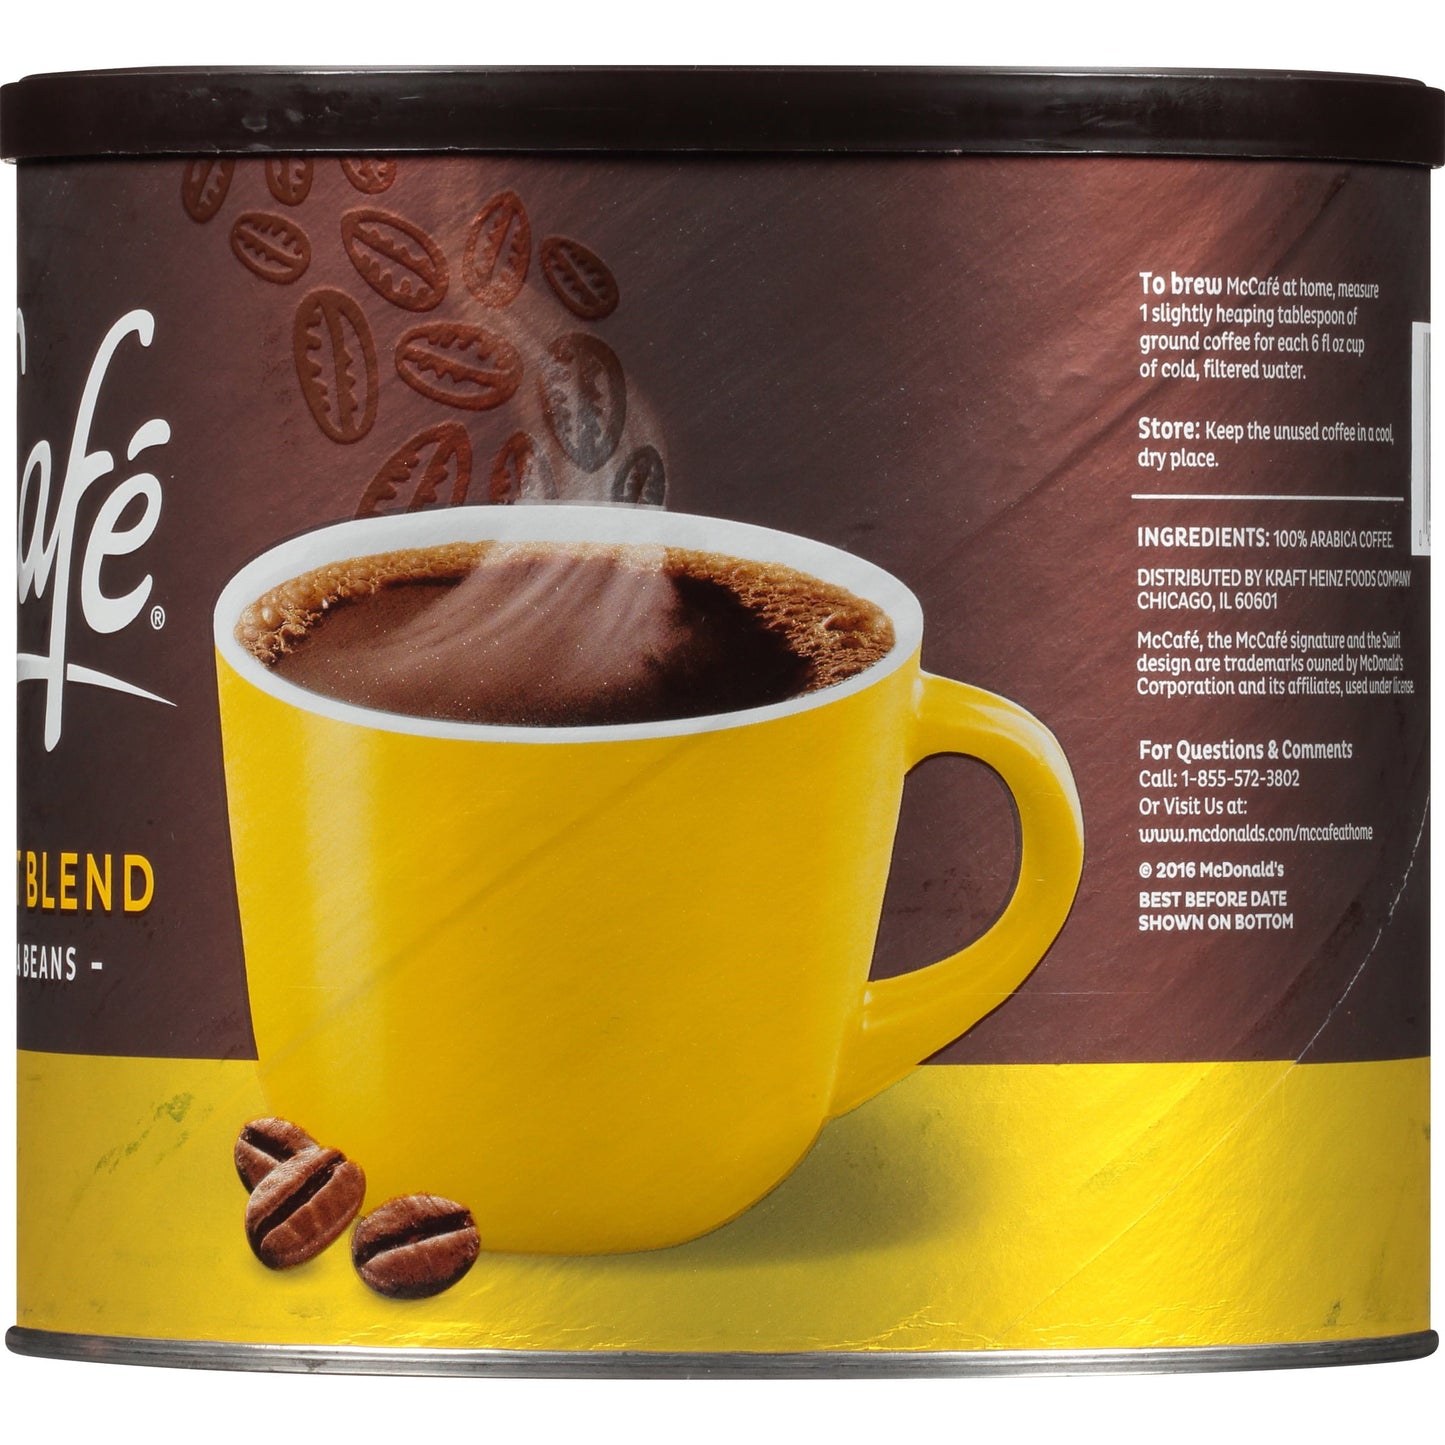 McCafe Light Roast Breakfast Blend Ground Coffee, Caffeinated, 30 oz Can